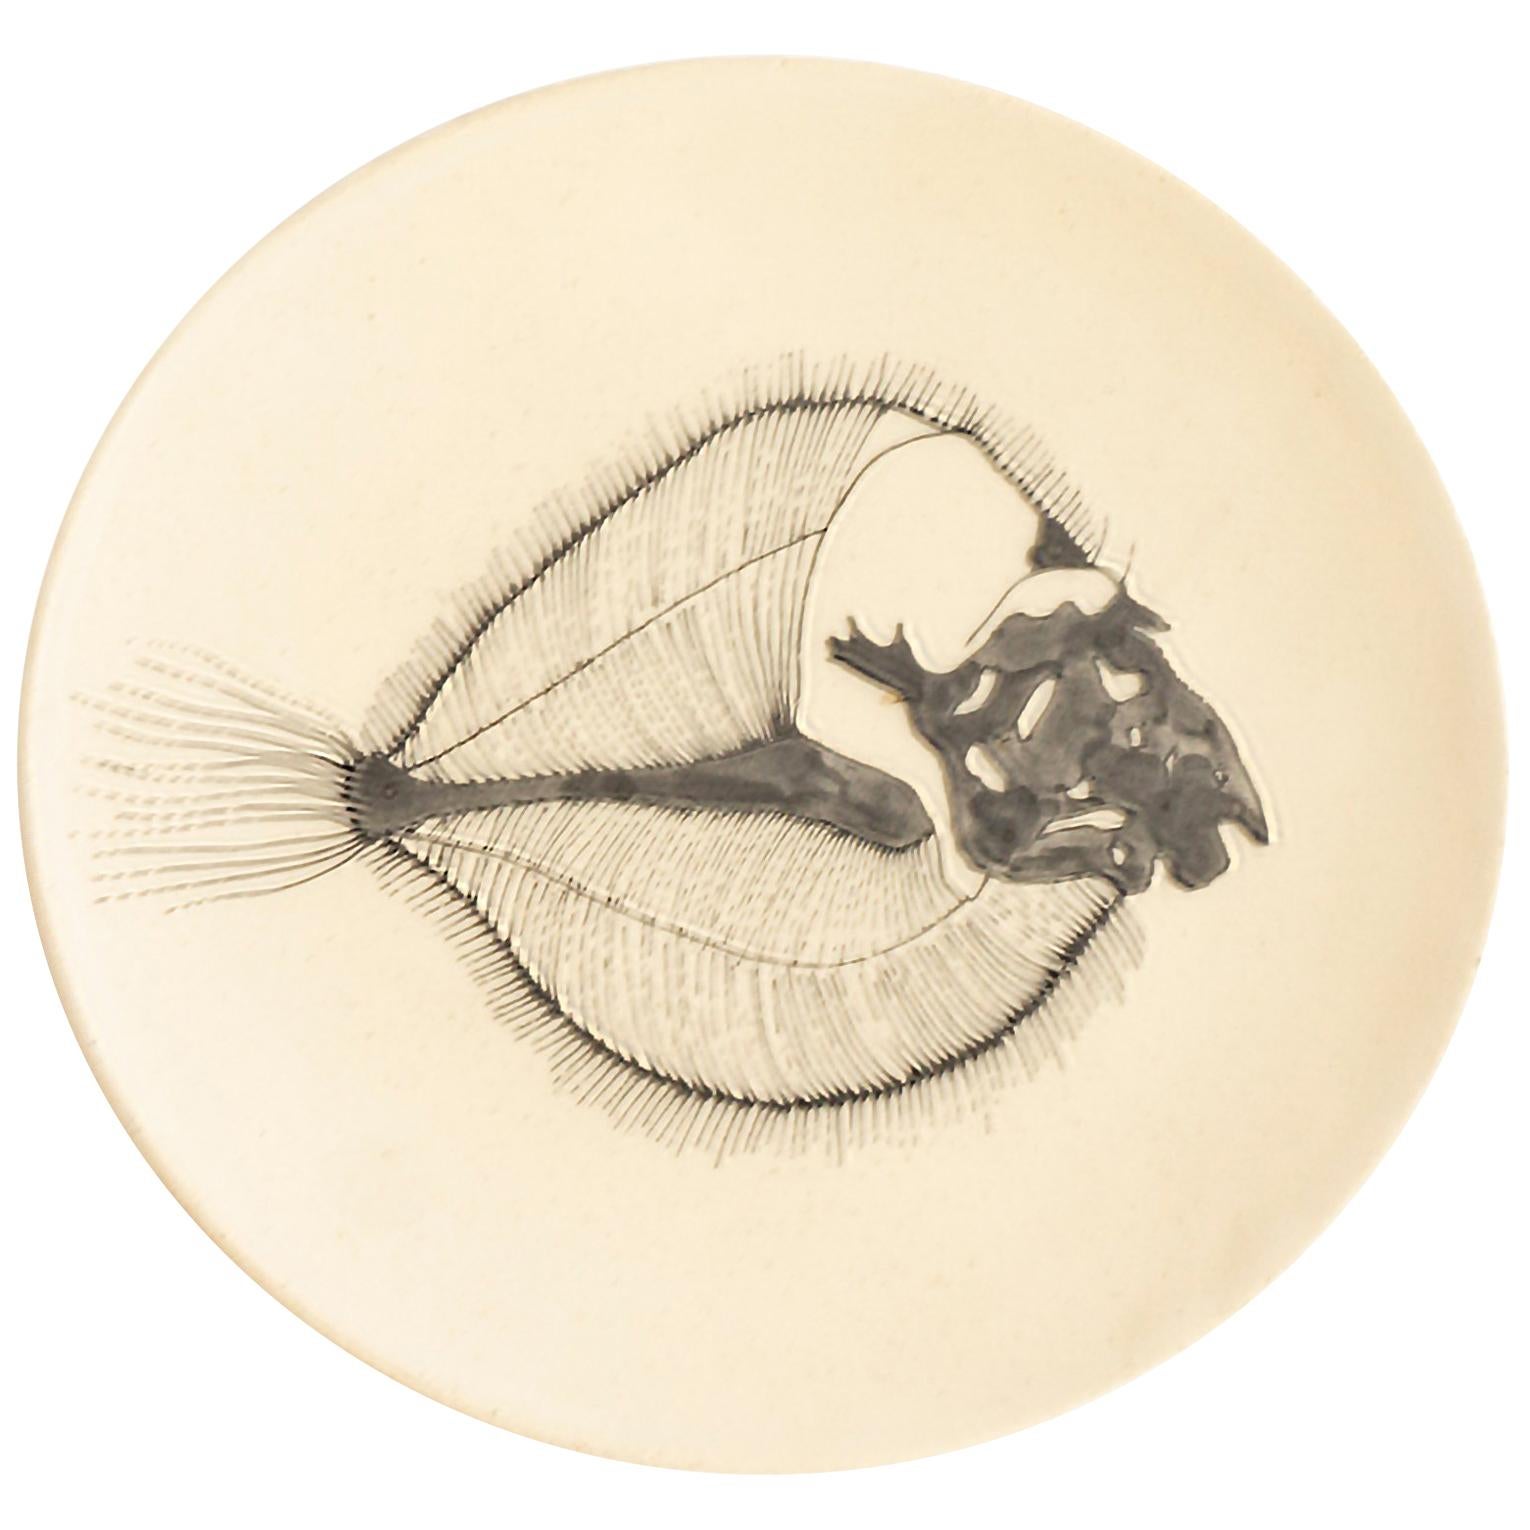 Small Handmade Ceramic Plates with Fish Fossil Illustration